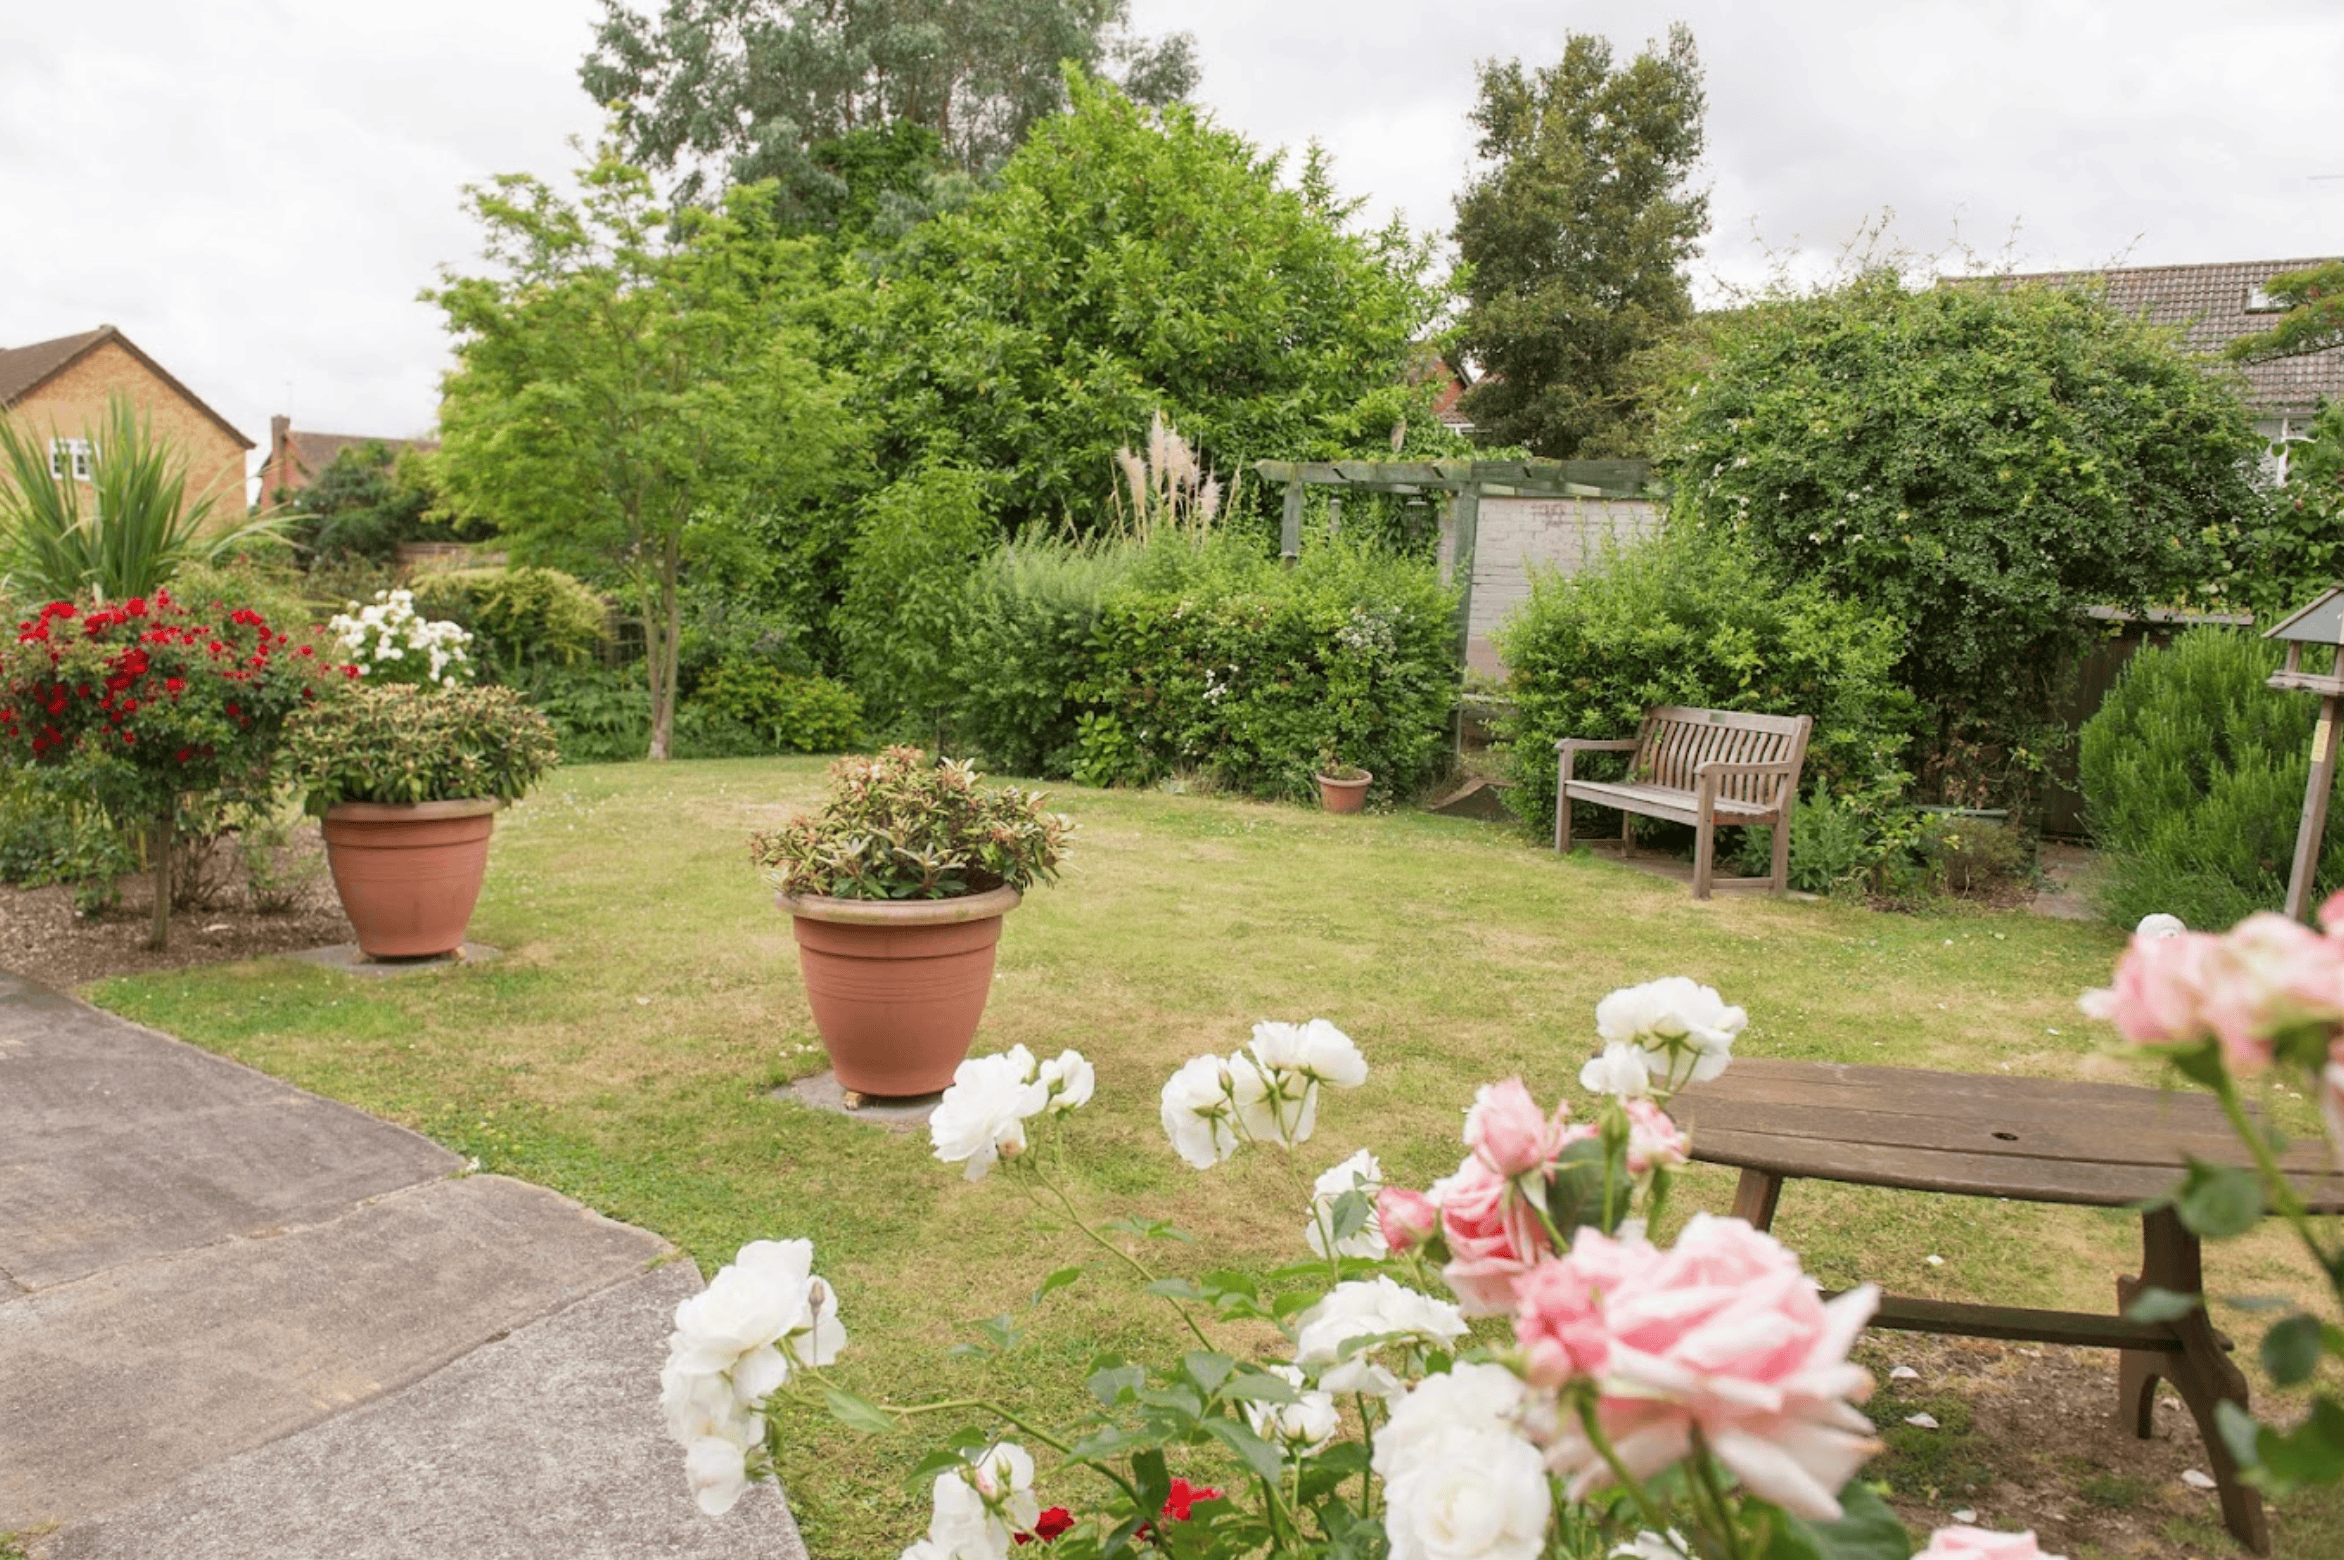 Garden of Nairn House in Enfield, London